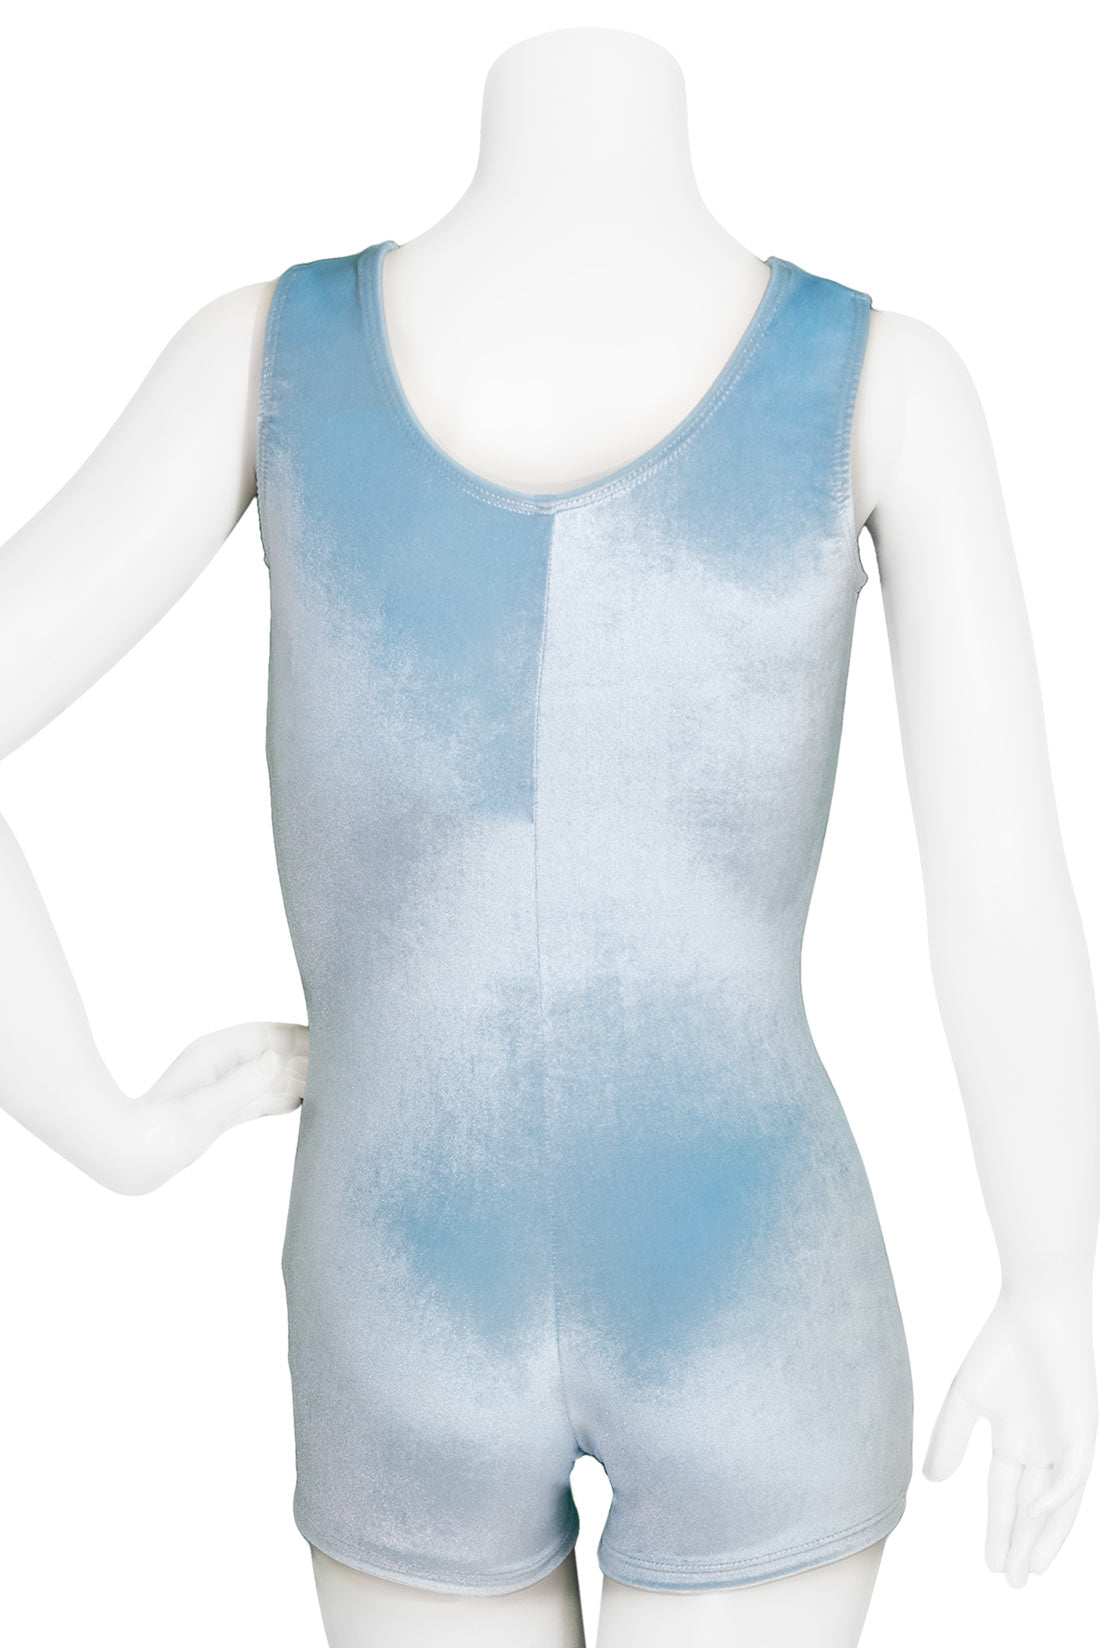 Plush velvet gymnastics unitard in baby blue, Destira, 2023